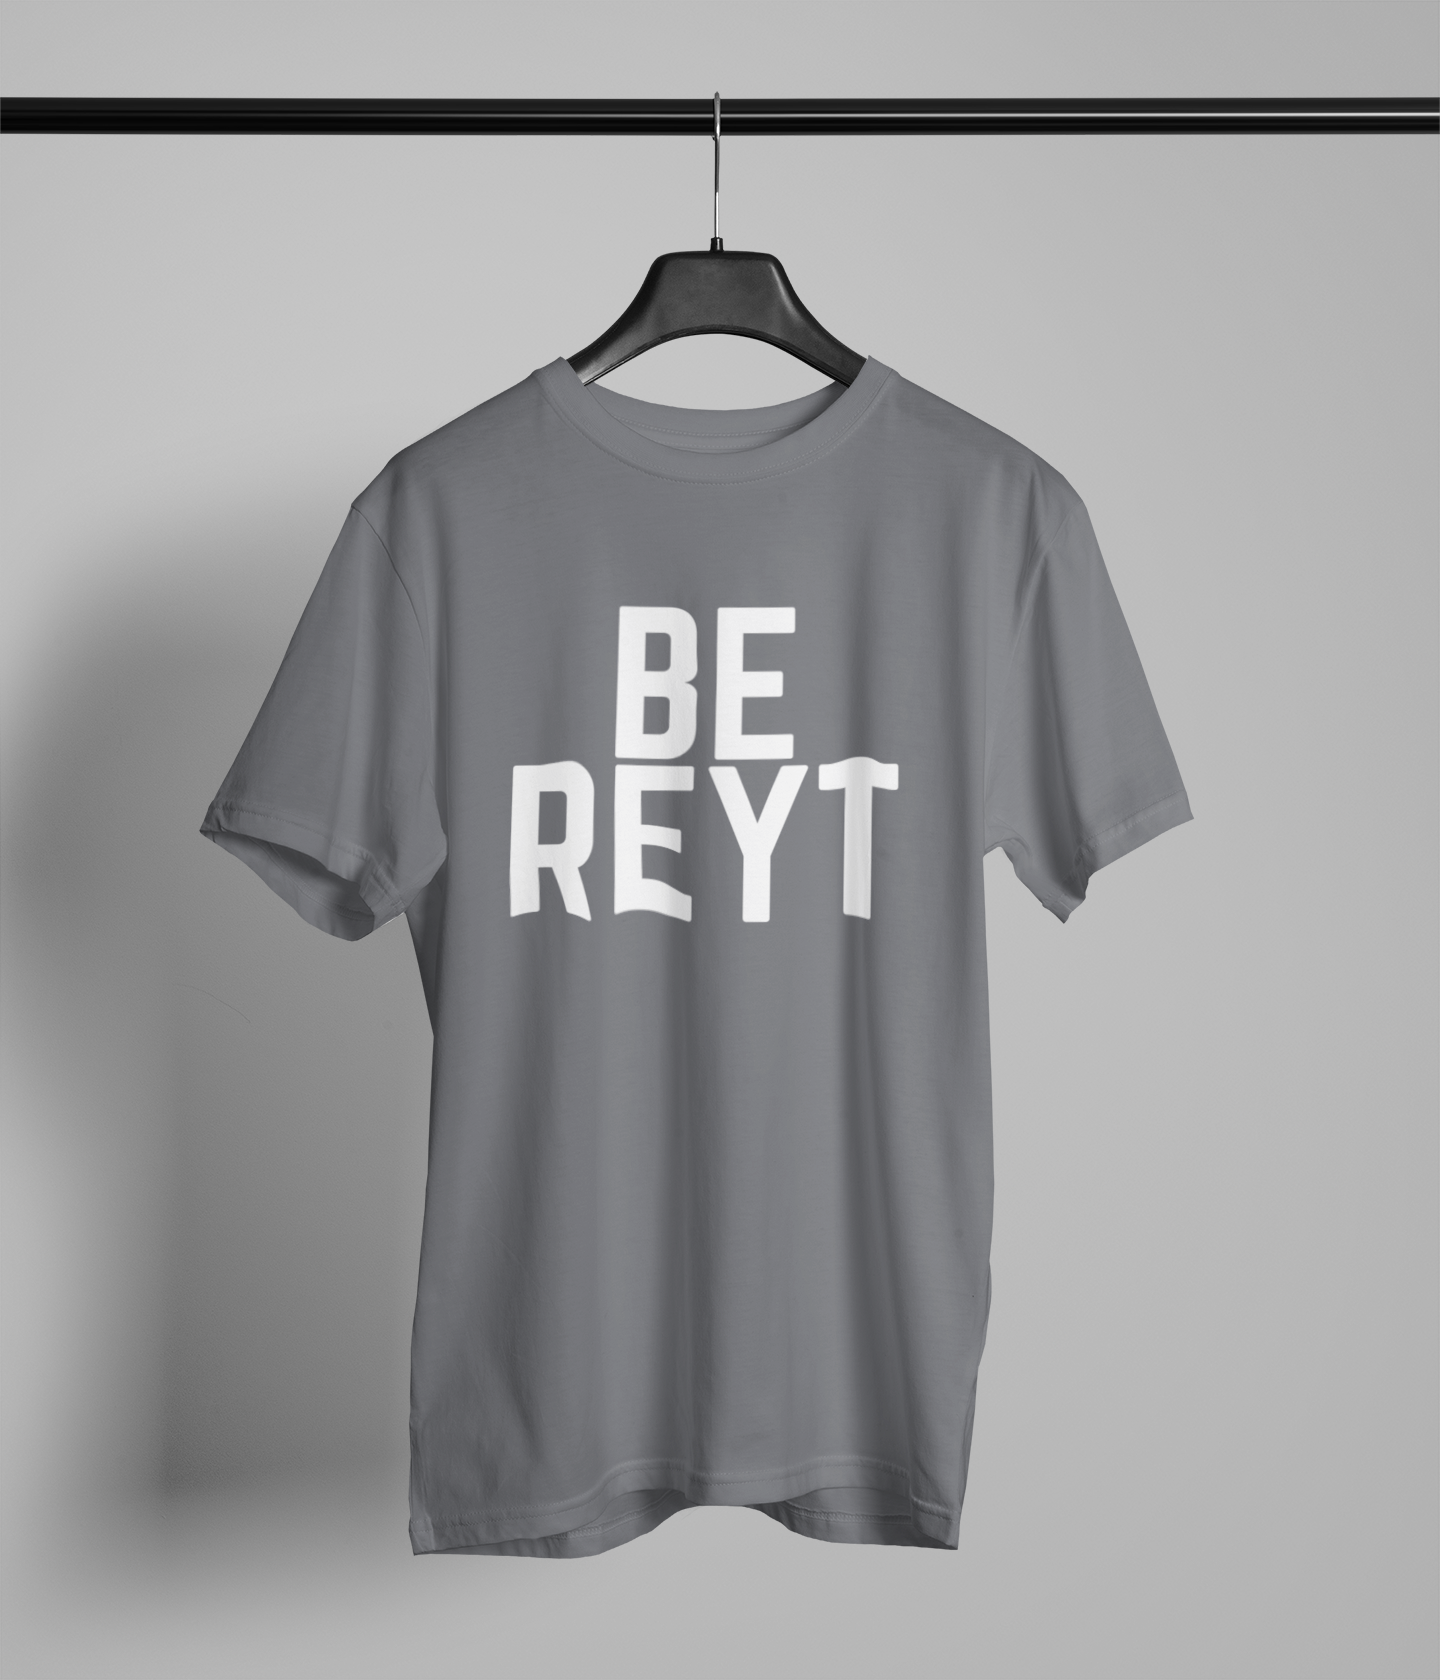 BE REYT Northern Slang T-Shirt Unisex